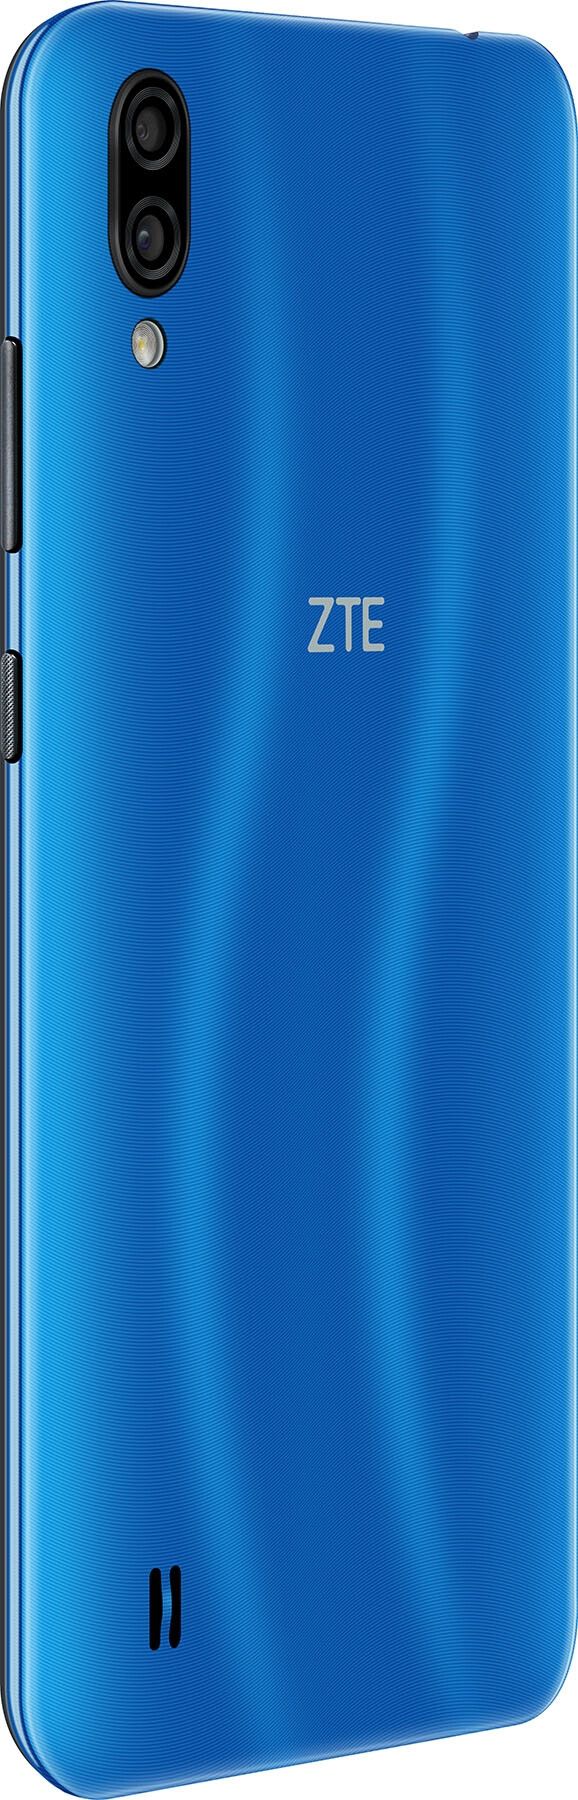 Акция на Смартфон ZTE Blade A5 2020 2/32GB Blue от Територія твоєї техніки - 3